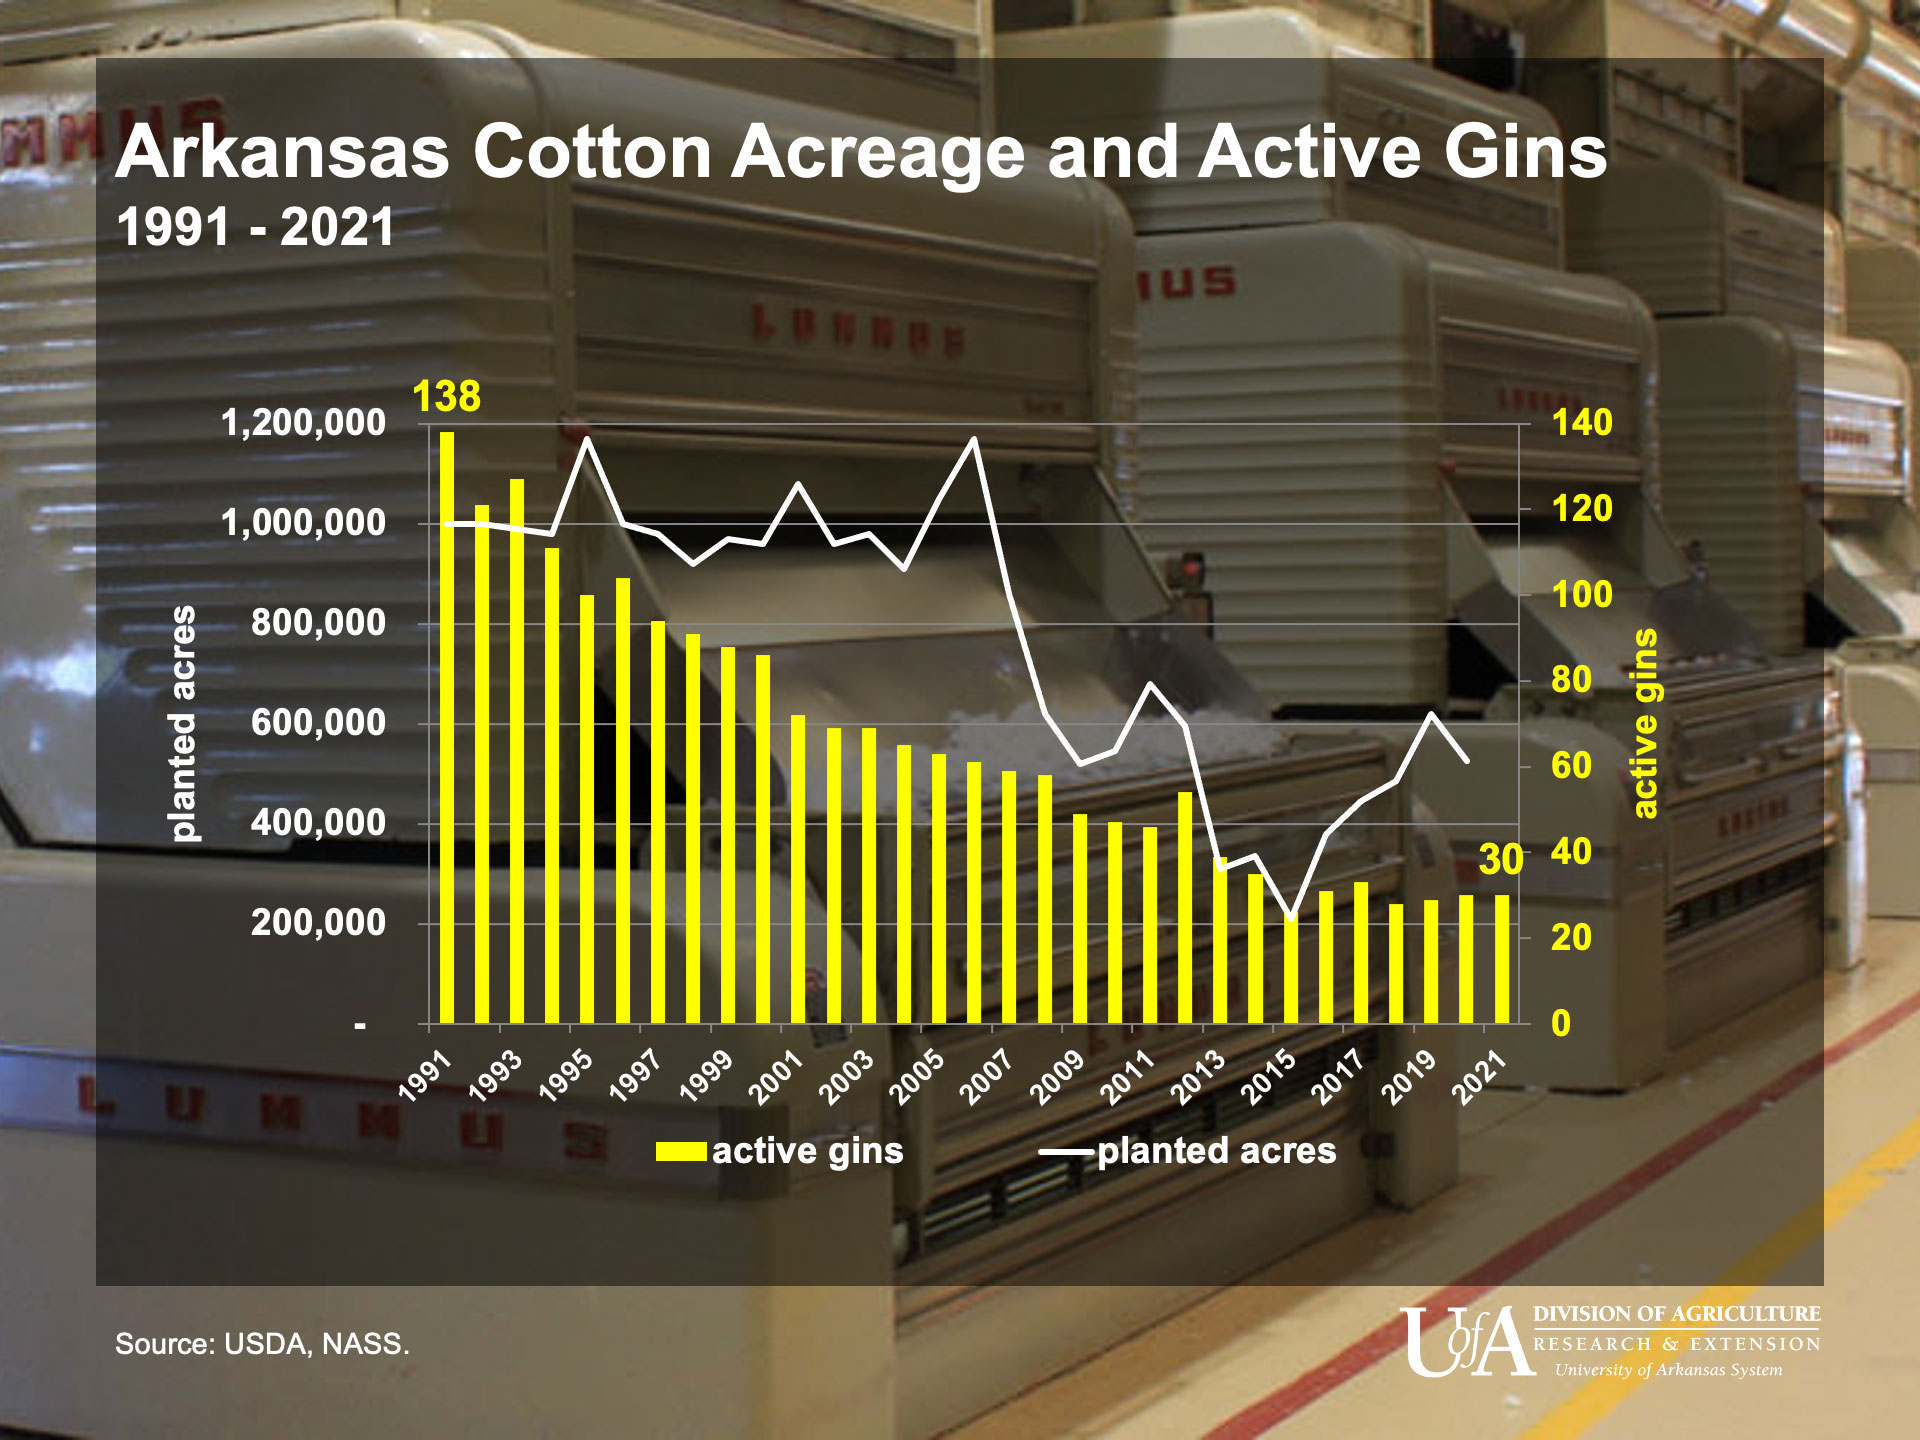 bar graph showing active gins in Arkansas sine 1991